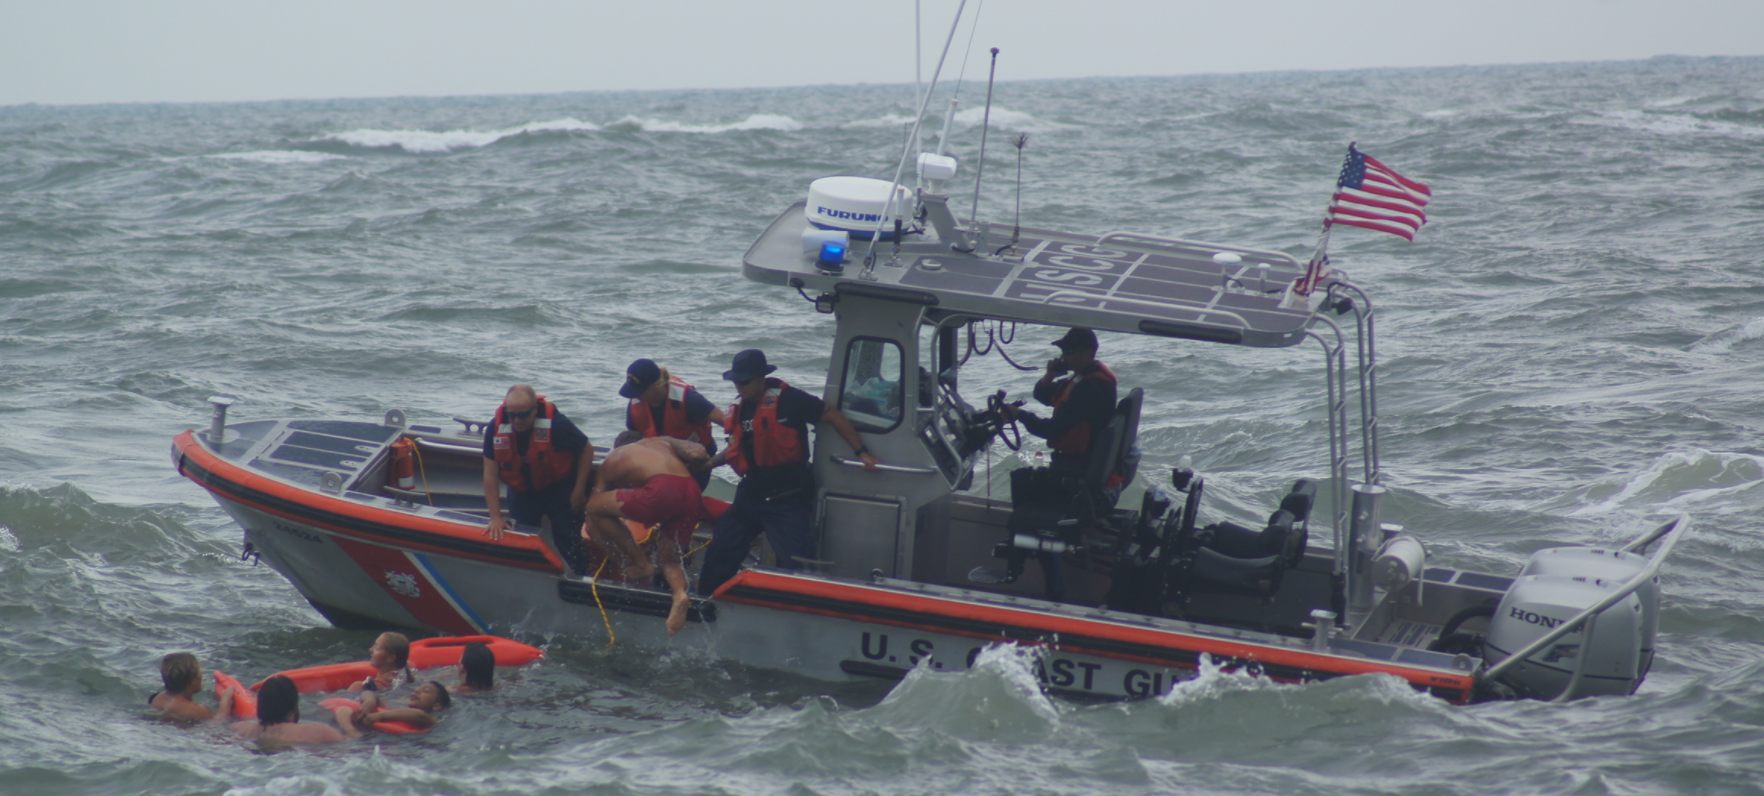 Coast Guard Rescue, rapid response, safety